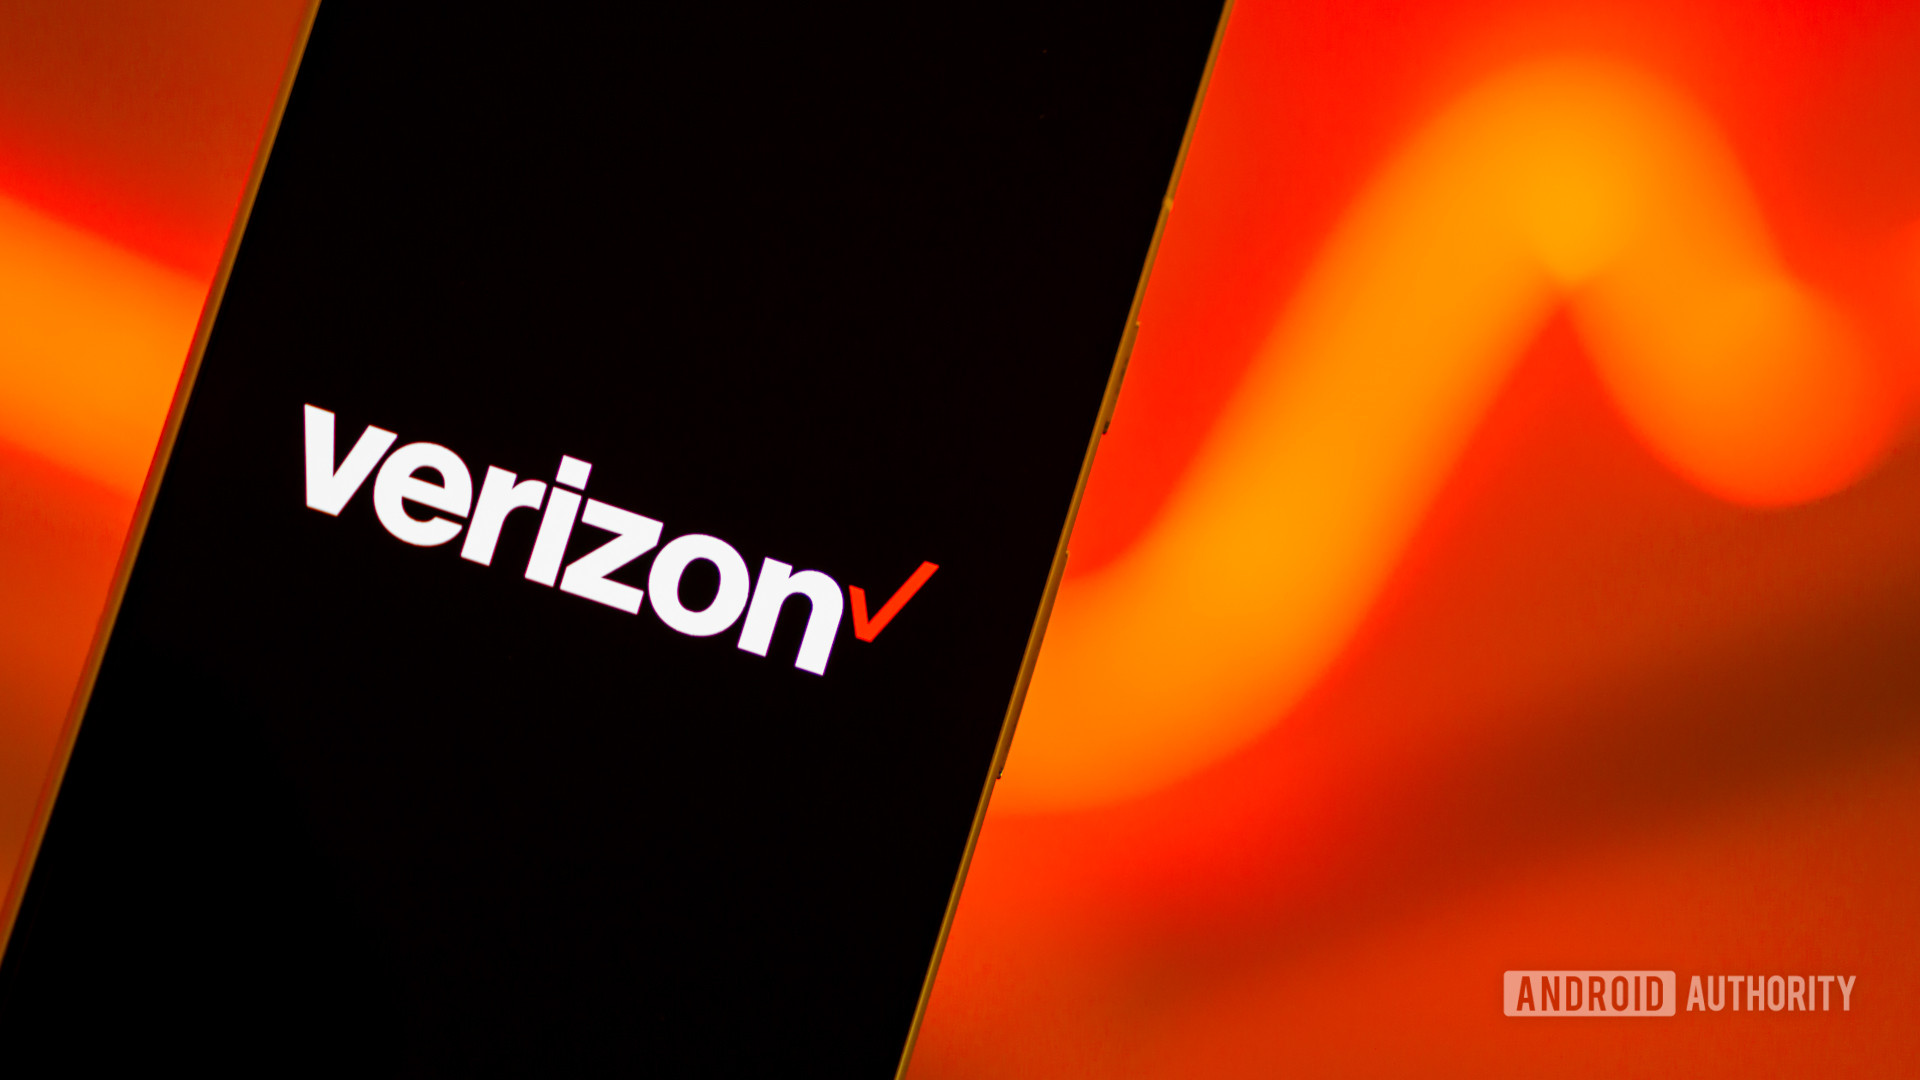 Verizon logo on smartphone